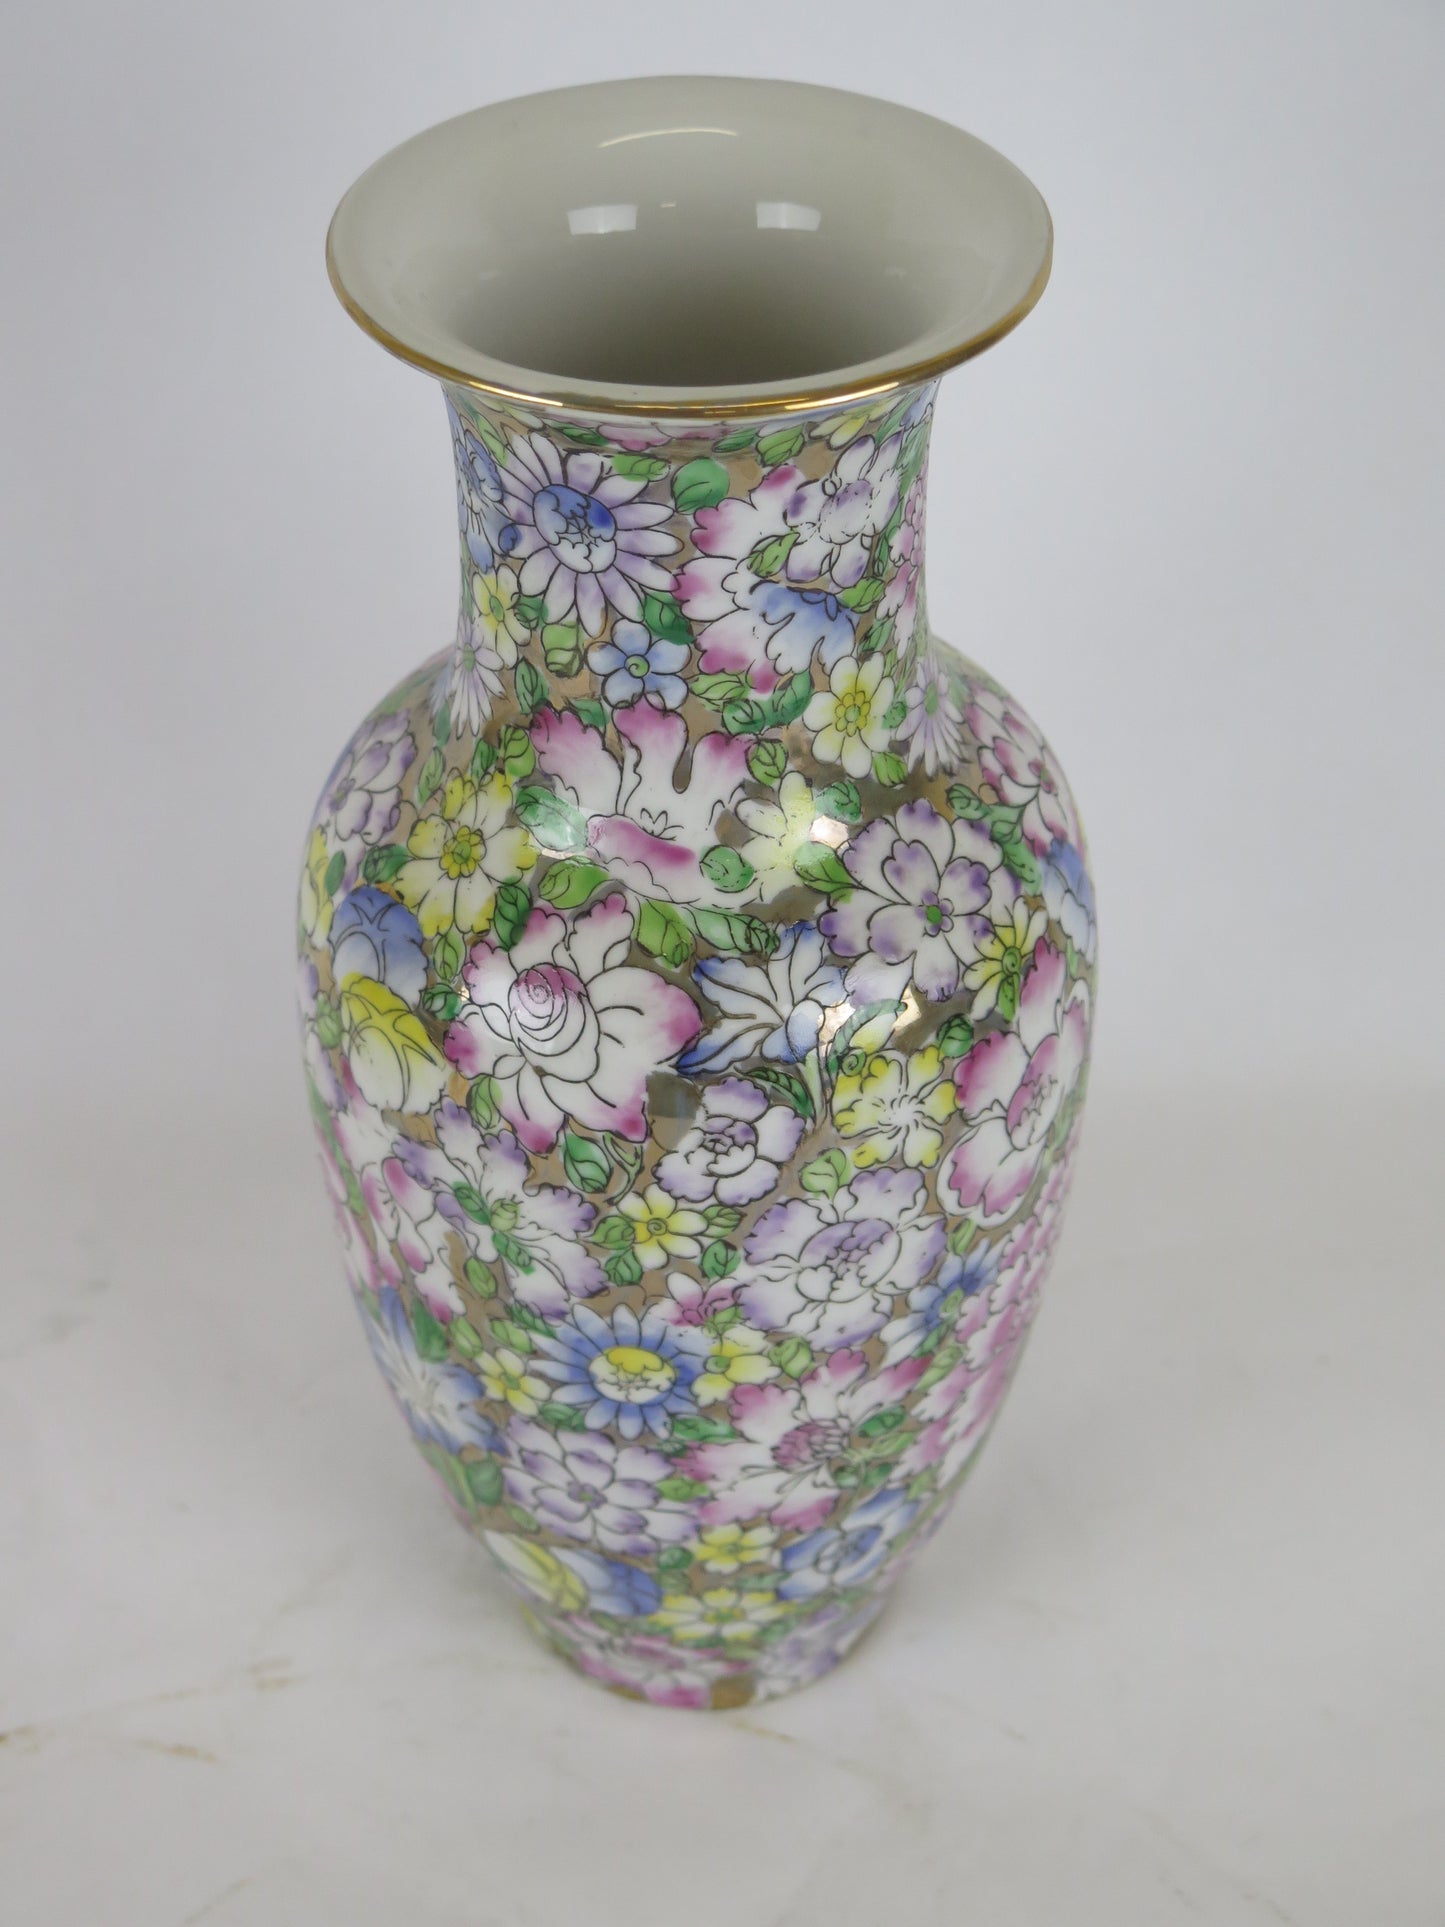 Hand painted porcelain flower vase China Asia vintage home decoration CM4 b